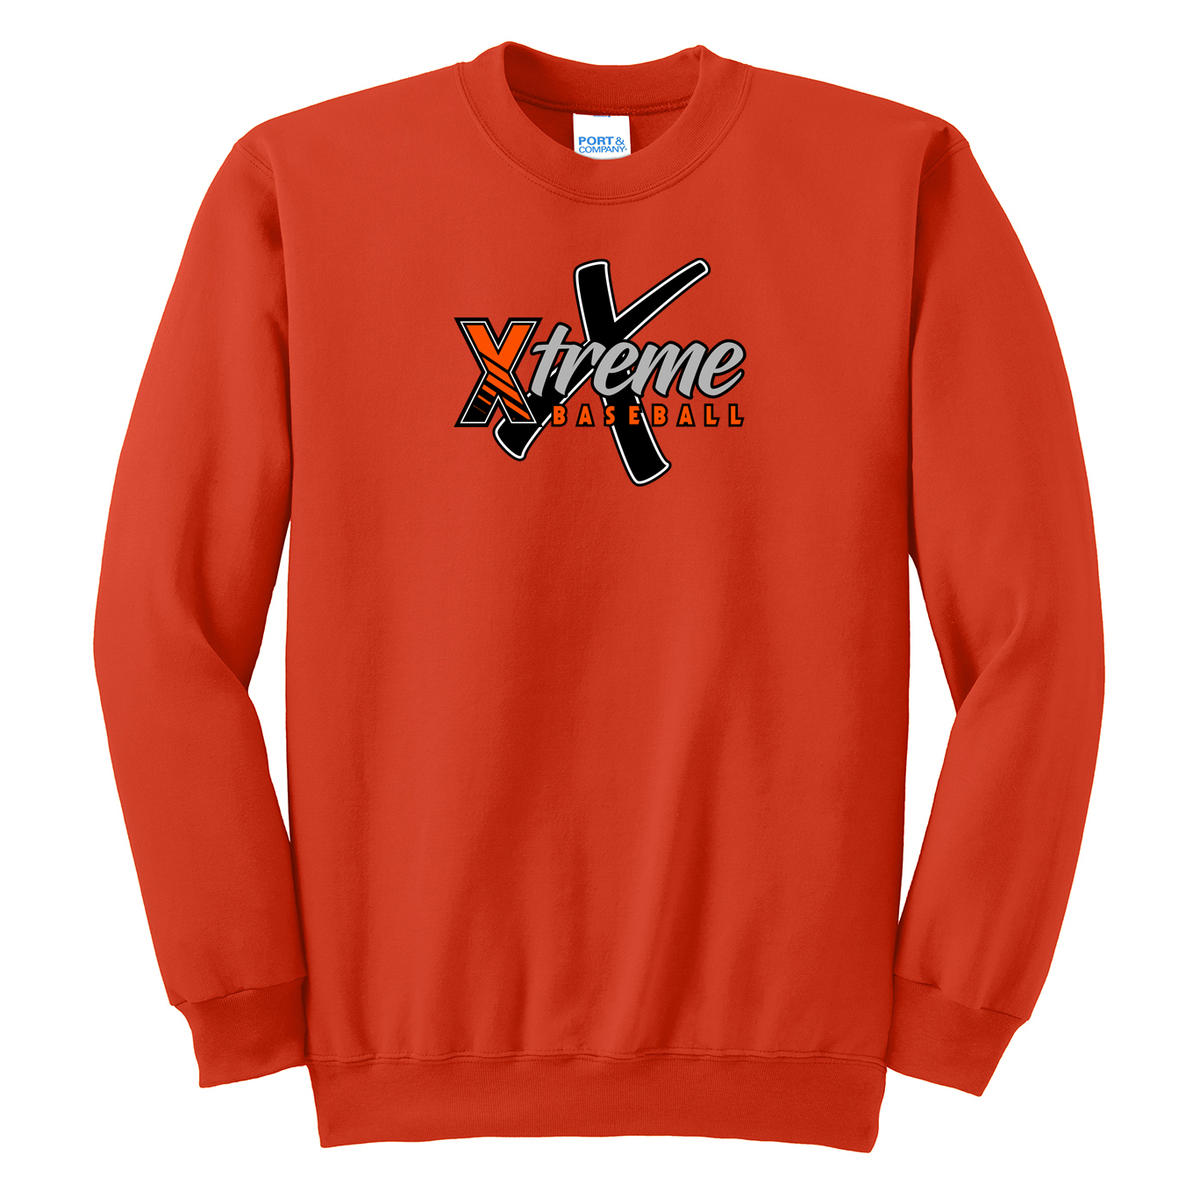 Xtreme Baseball Crew Neck Sweater